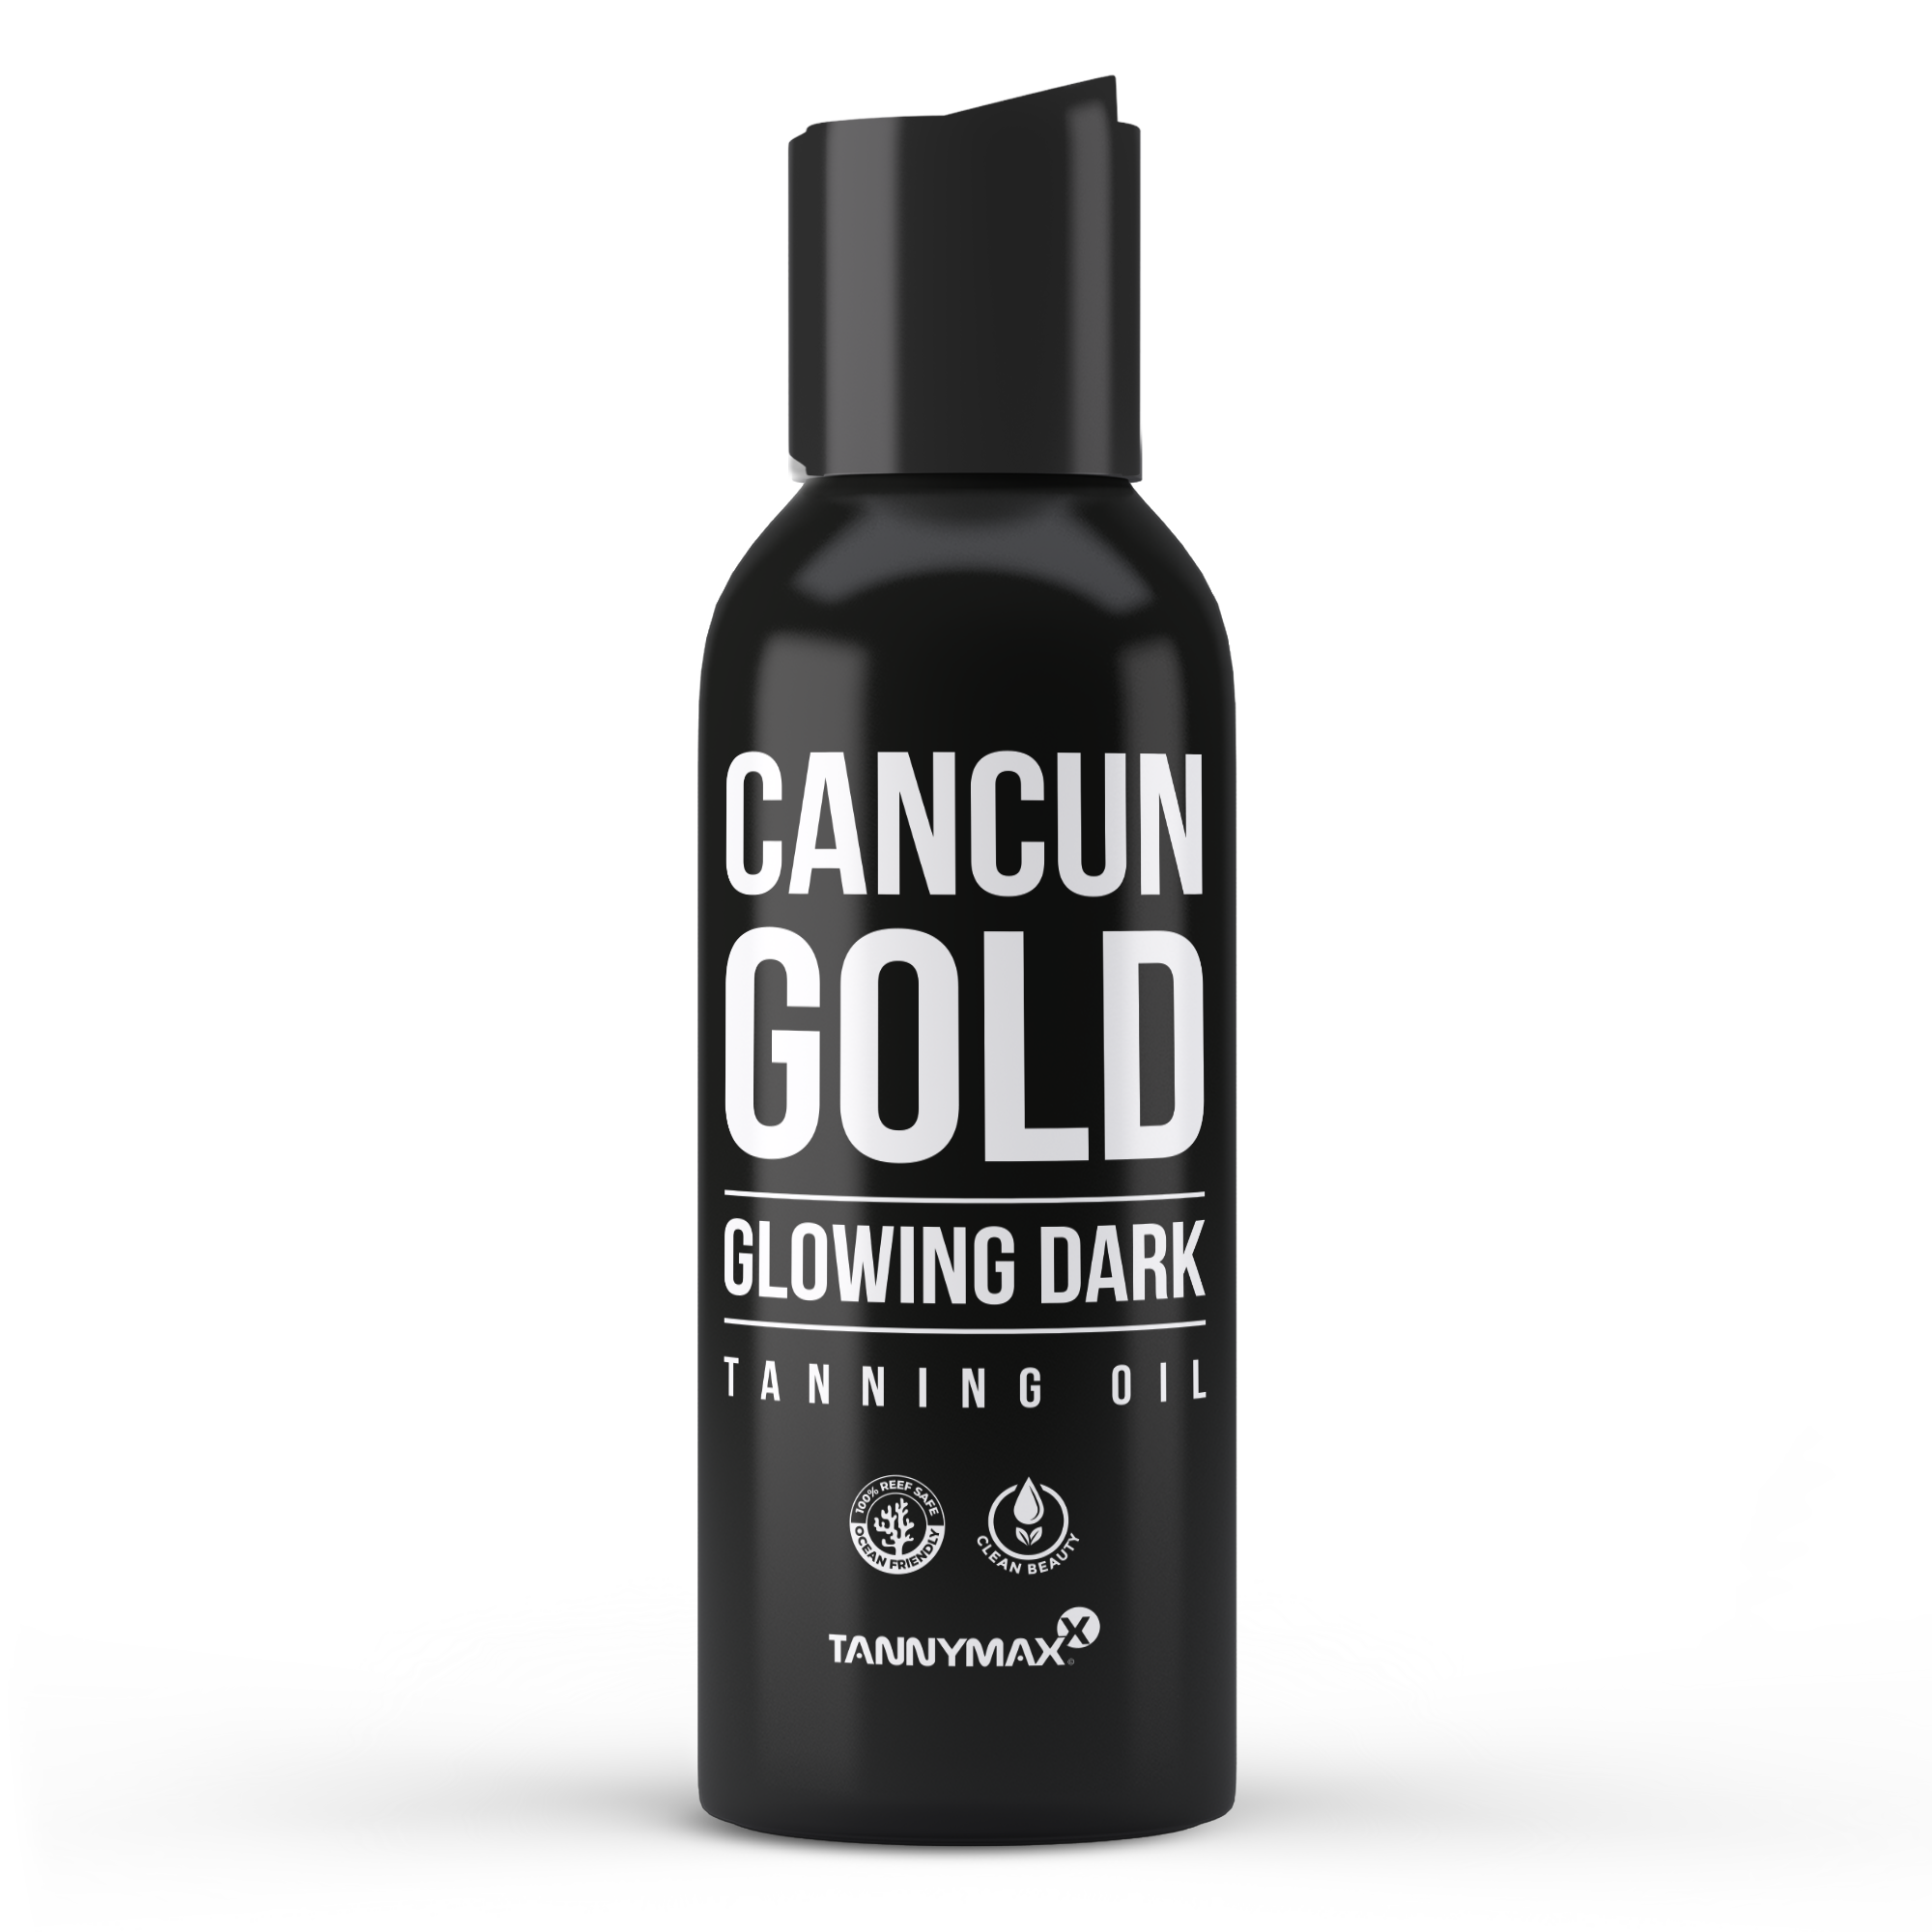 Cancun Gold Glowing Dark Tanning Oil